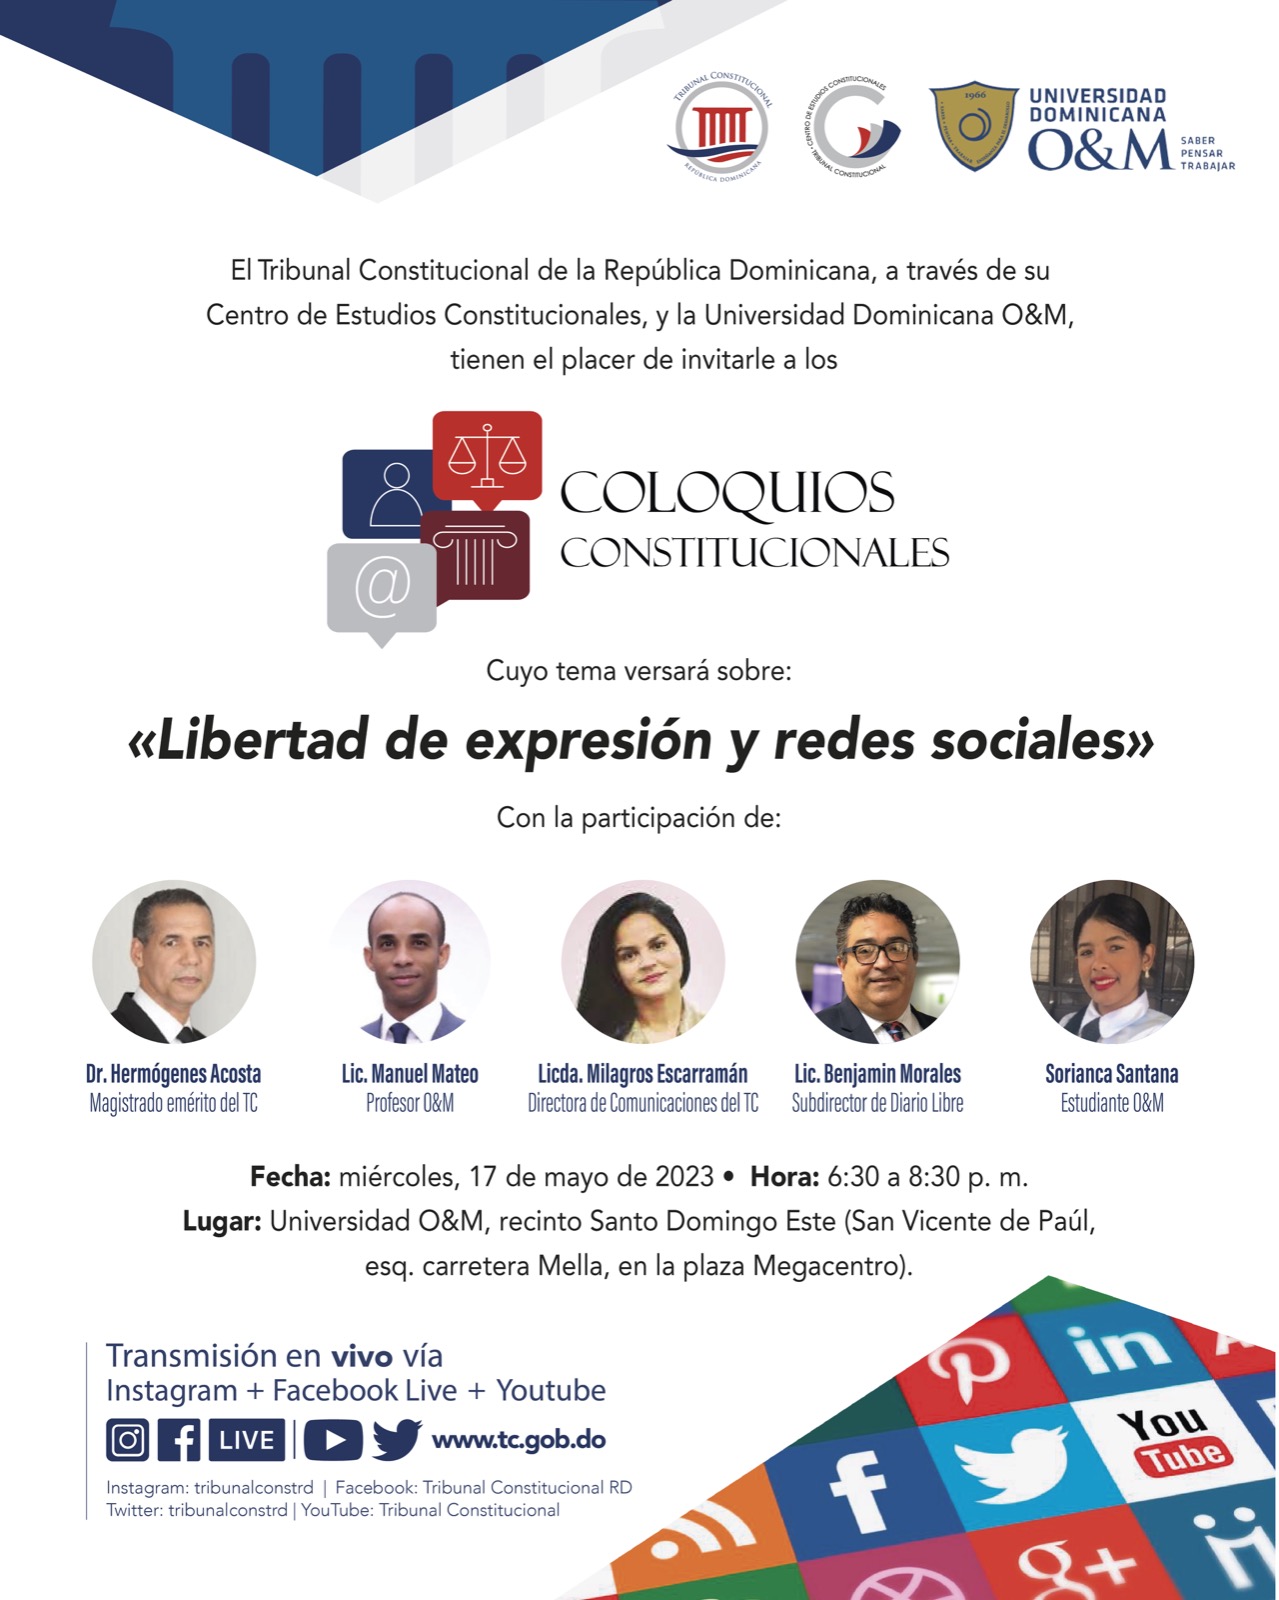 Coloquio constitucional virtual - "Libertad de expresión y Redes Sociales".